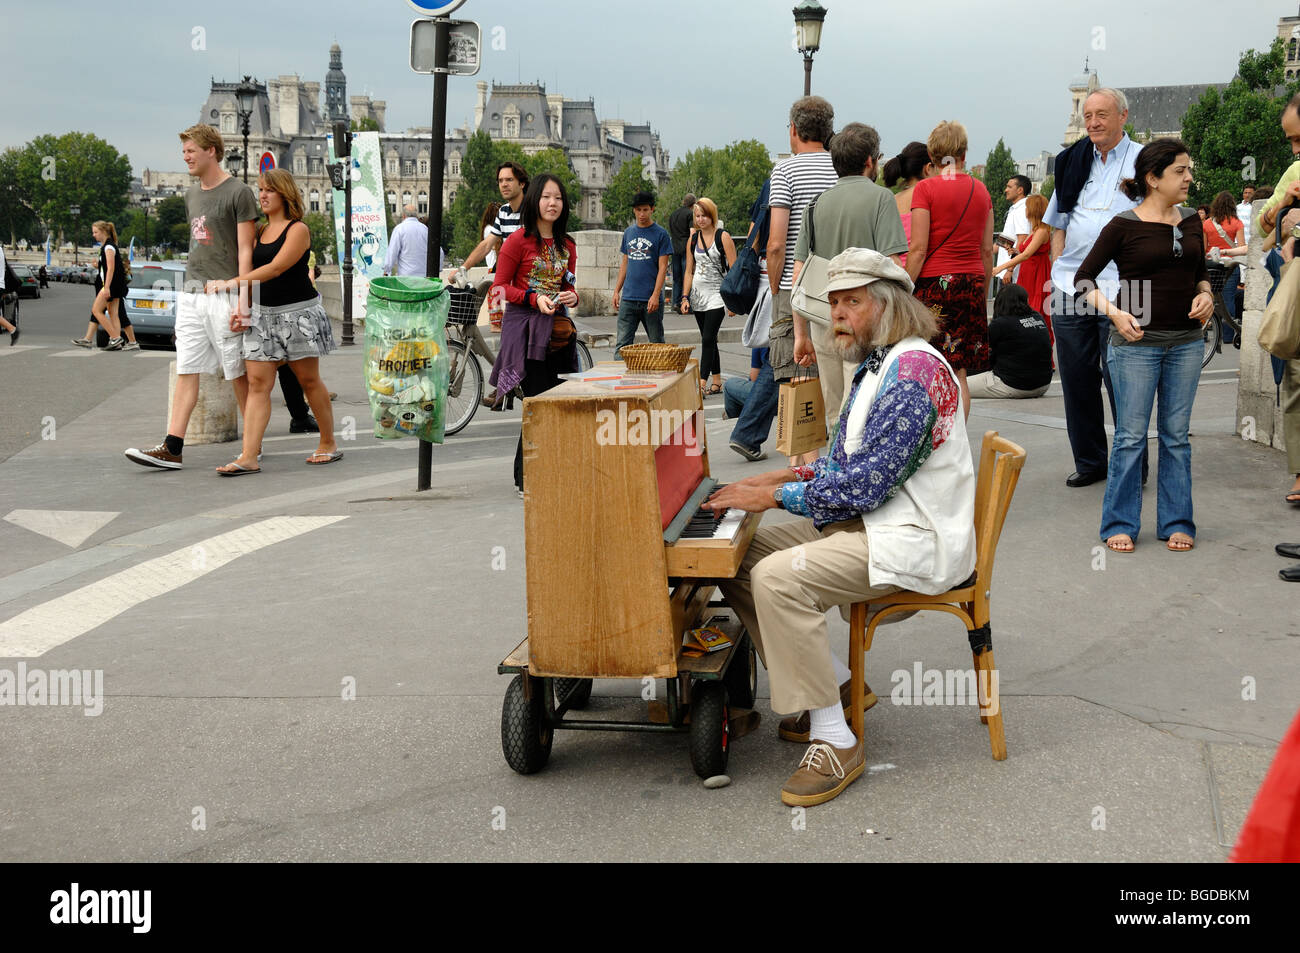 Touristen und Straßenmusiker spielen Klavier, Pianist oder Klavierspieler, Pont de l'Archevèche, Île de la Cité, Paris, Frankreich Stockfoto